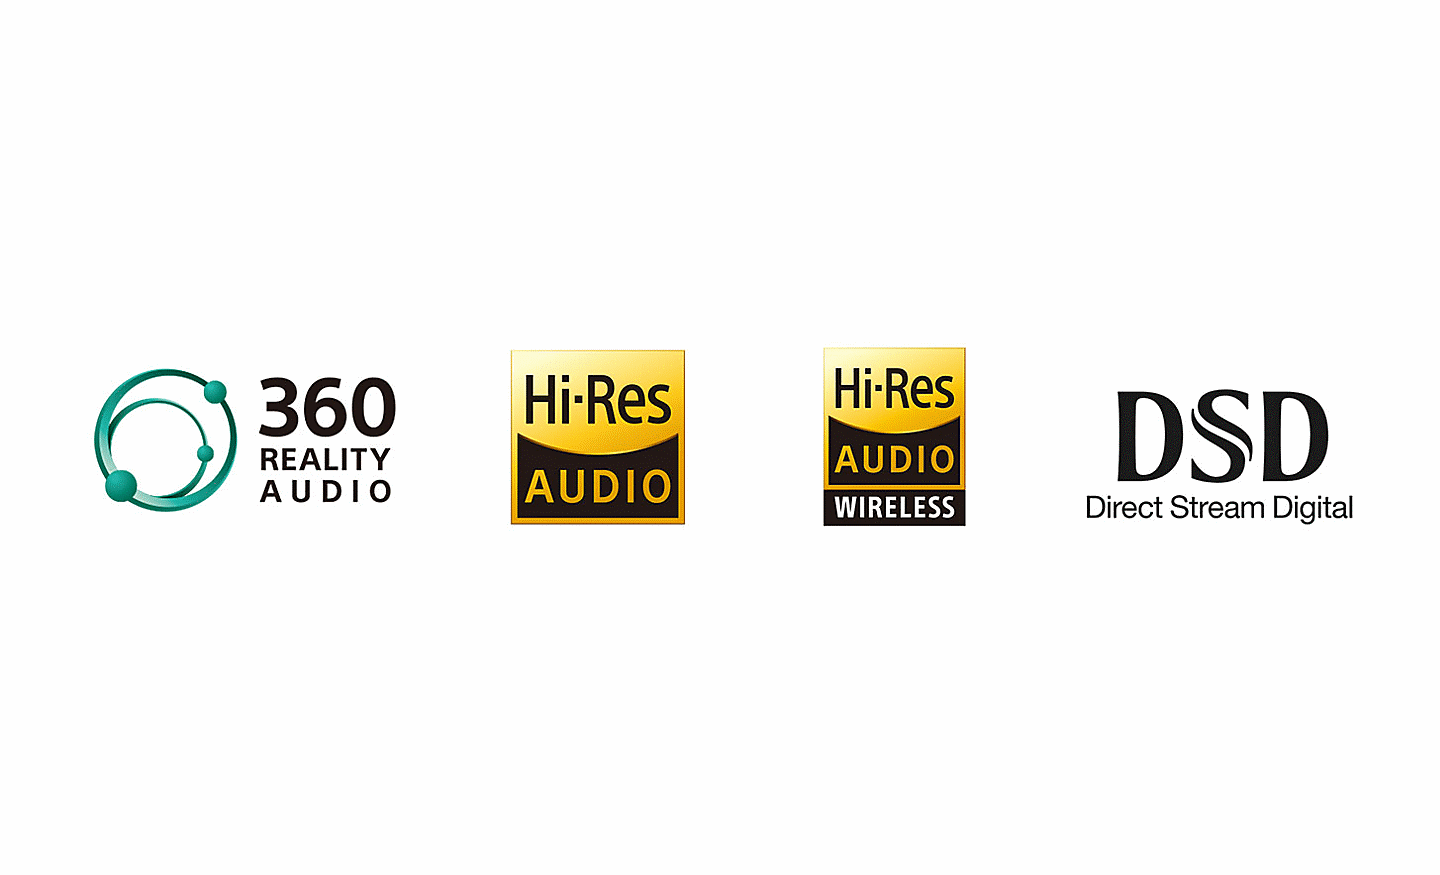 Logótipo 360 Reality Audio, logótipo Hi-Res Audio, logótipo Hi-Res Audio Wireless, logótipo DSD Direct Stream Digital